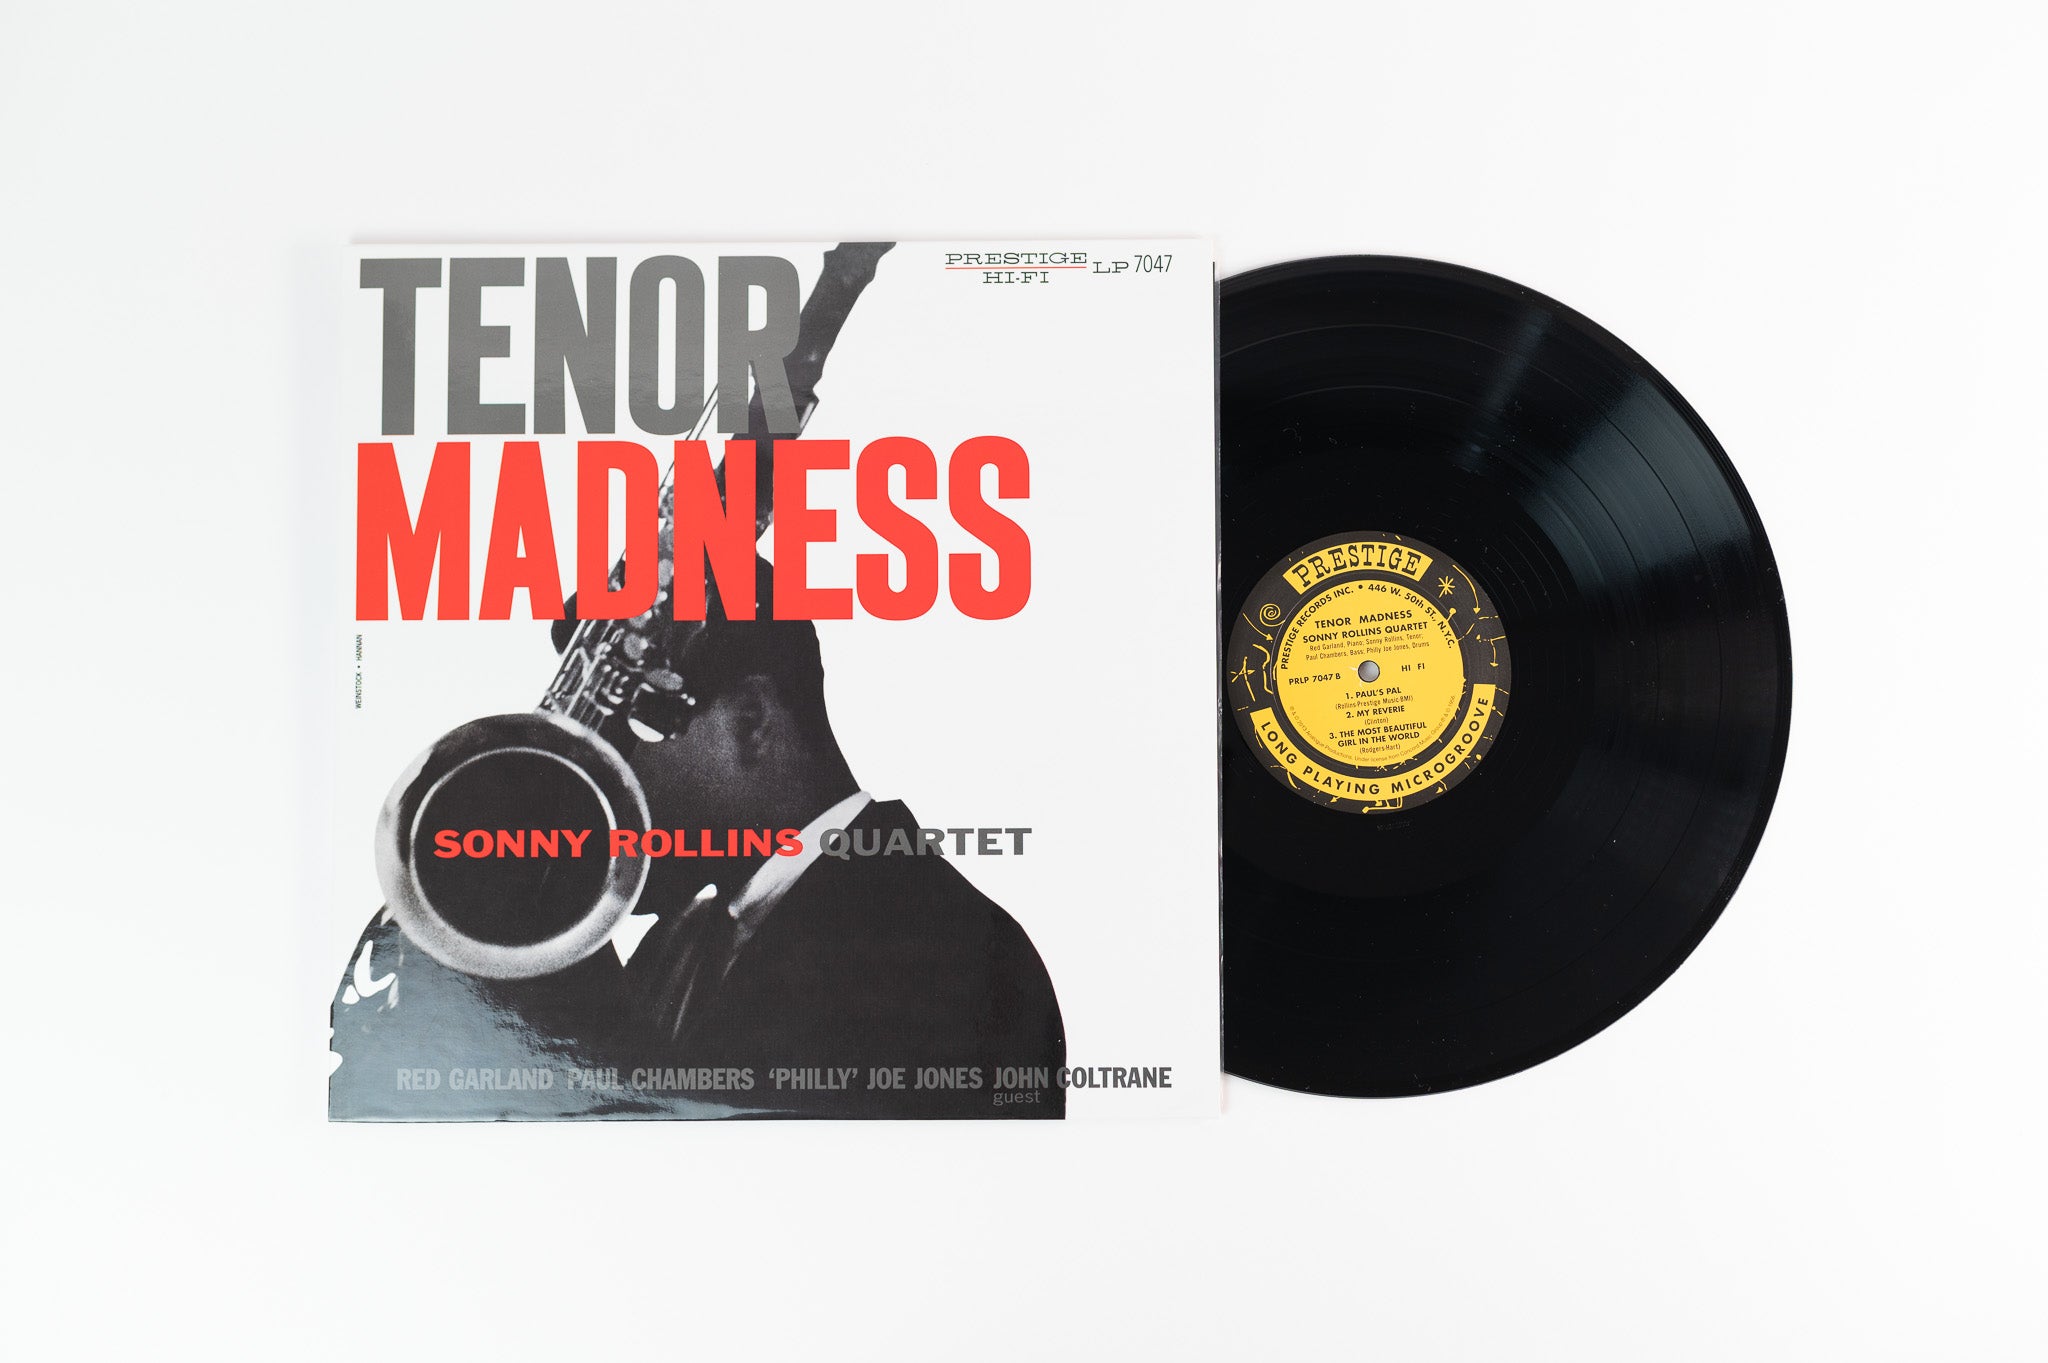 Sonny Rollins Quartet - Tenor Madness on Prestige 200 Gram Analogue Productions Reissue